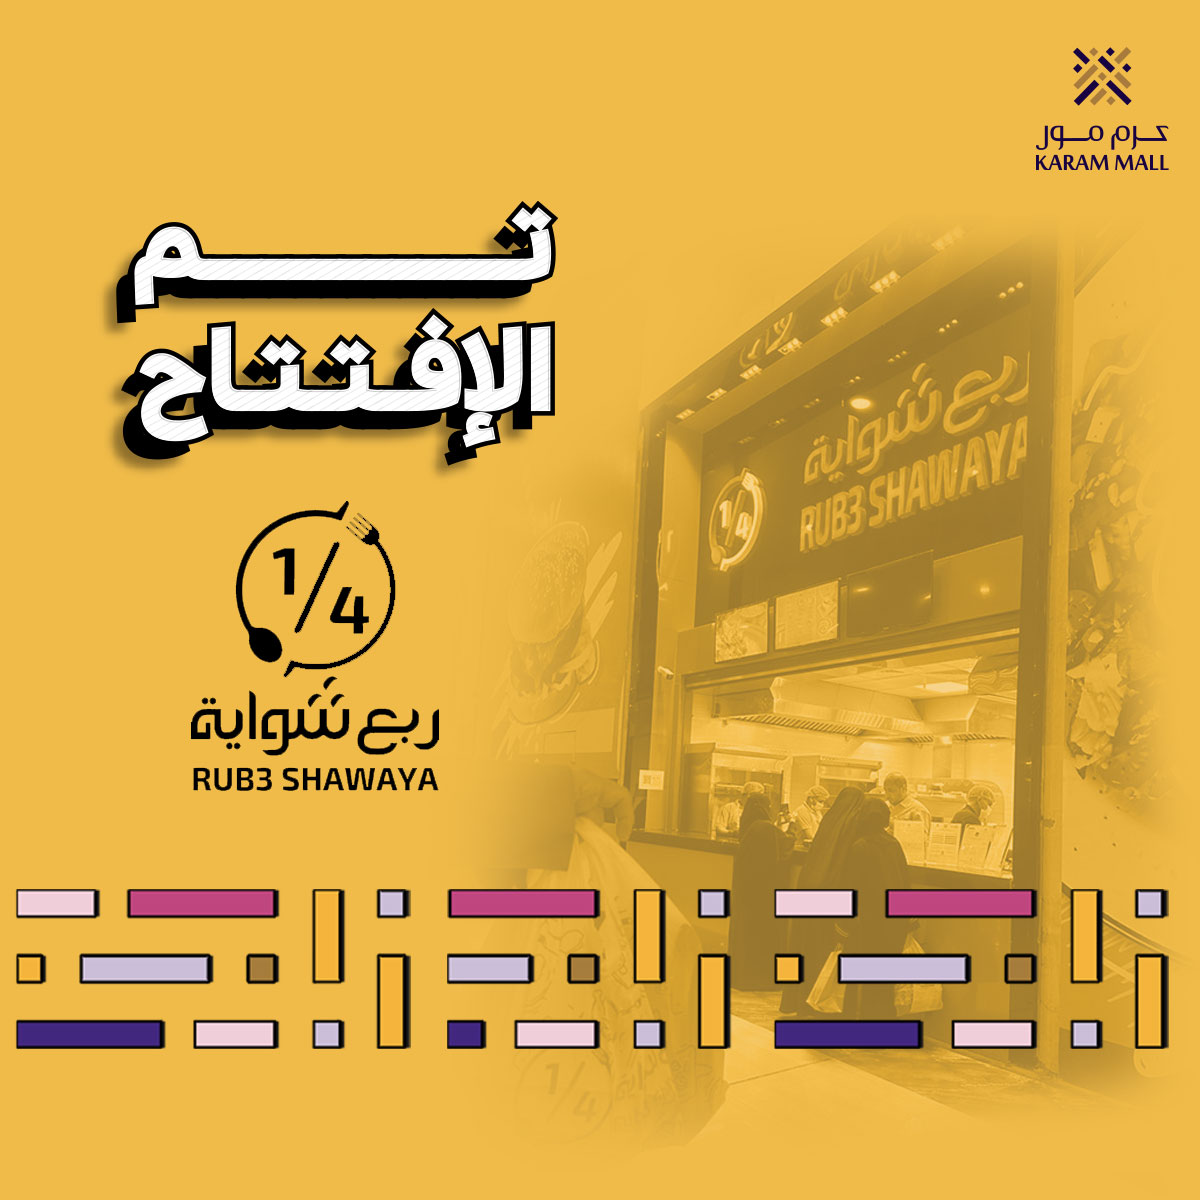 Rub3 Shawaya Restaurant Now Open